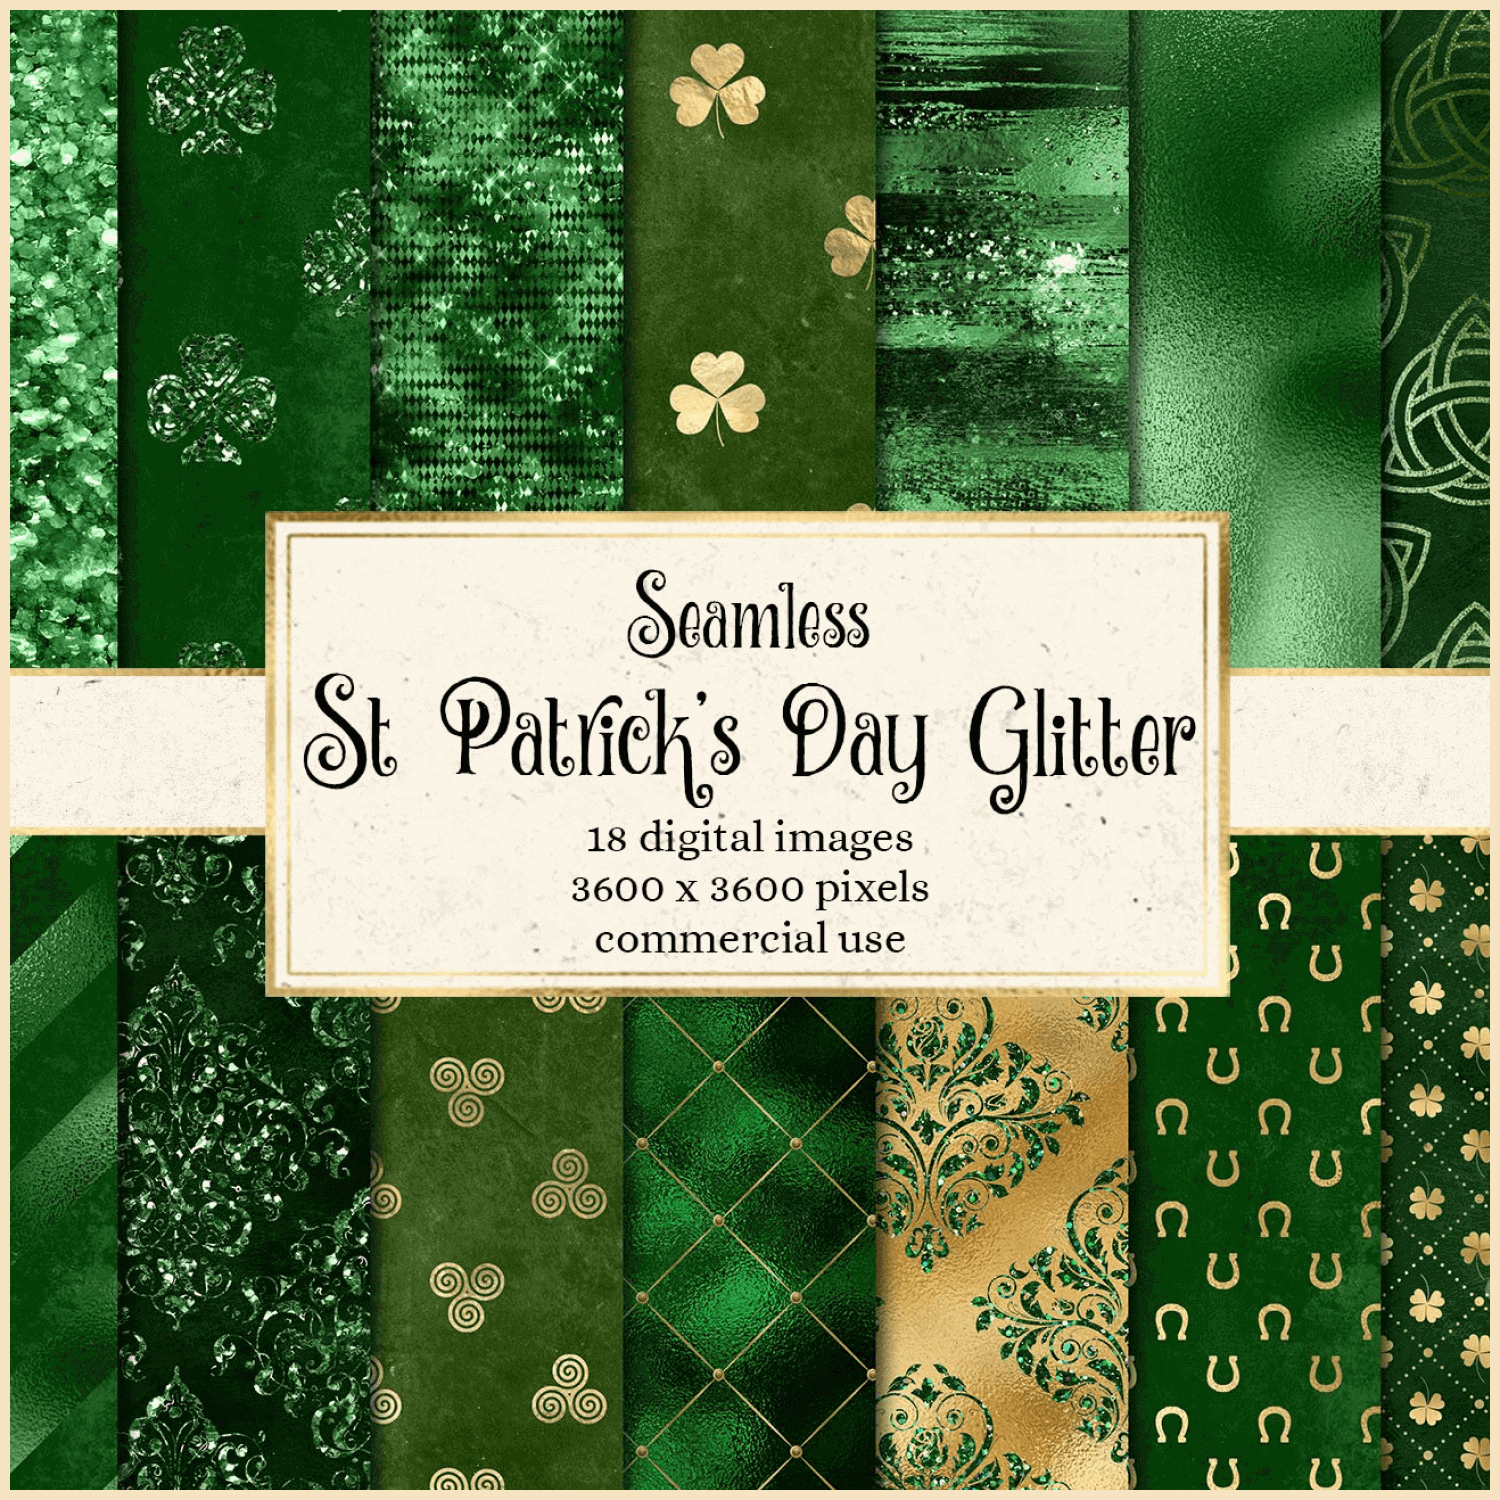 St Patricks Day Glitter.